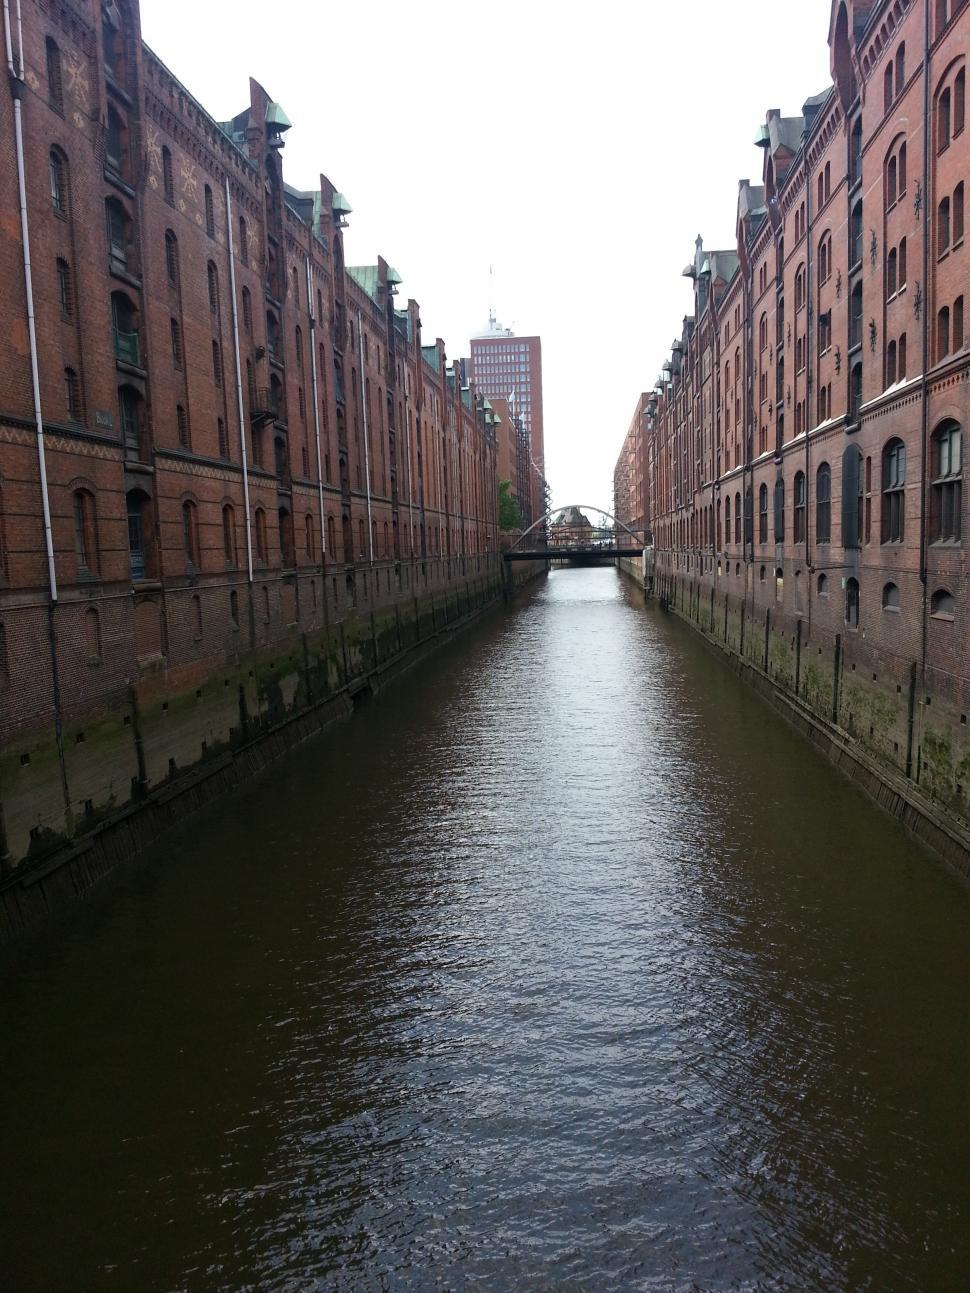 Free Image of City of Hamburg canal 